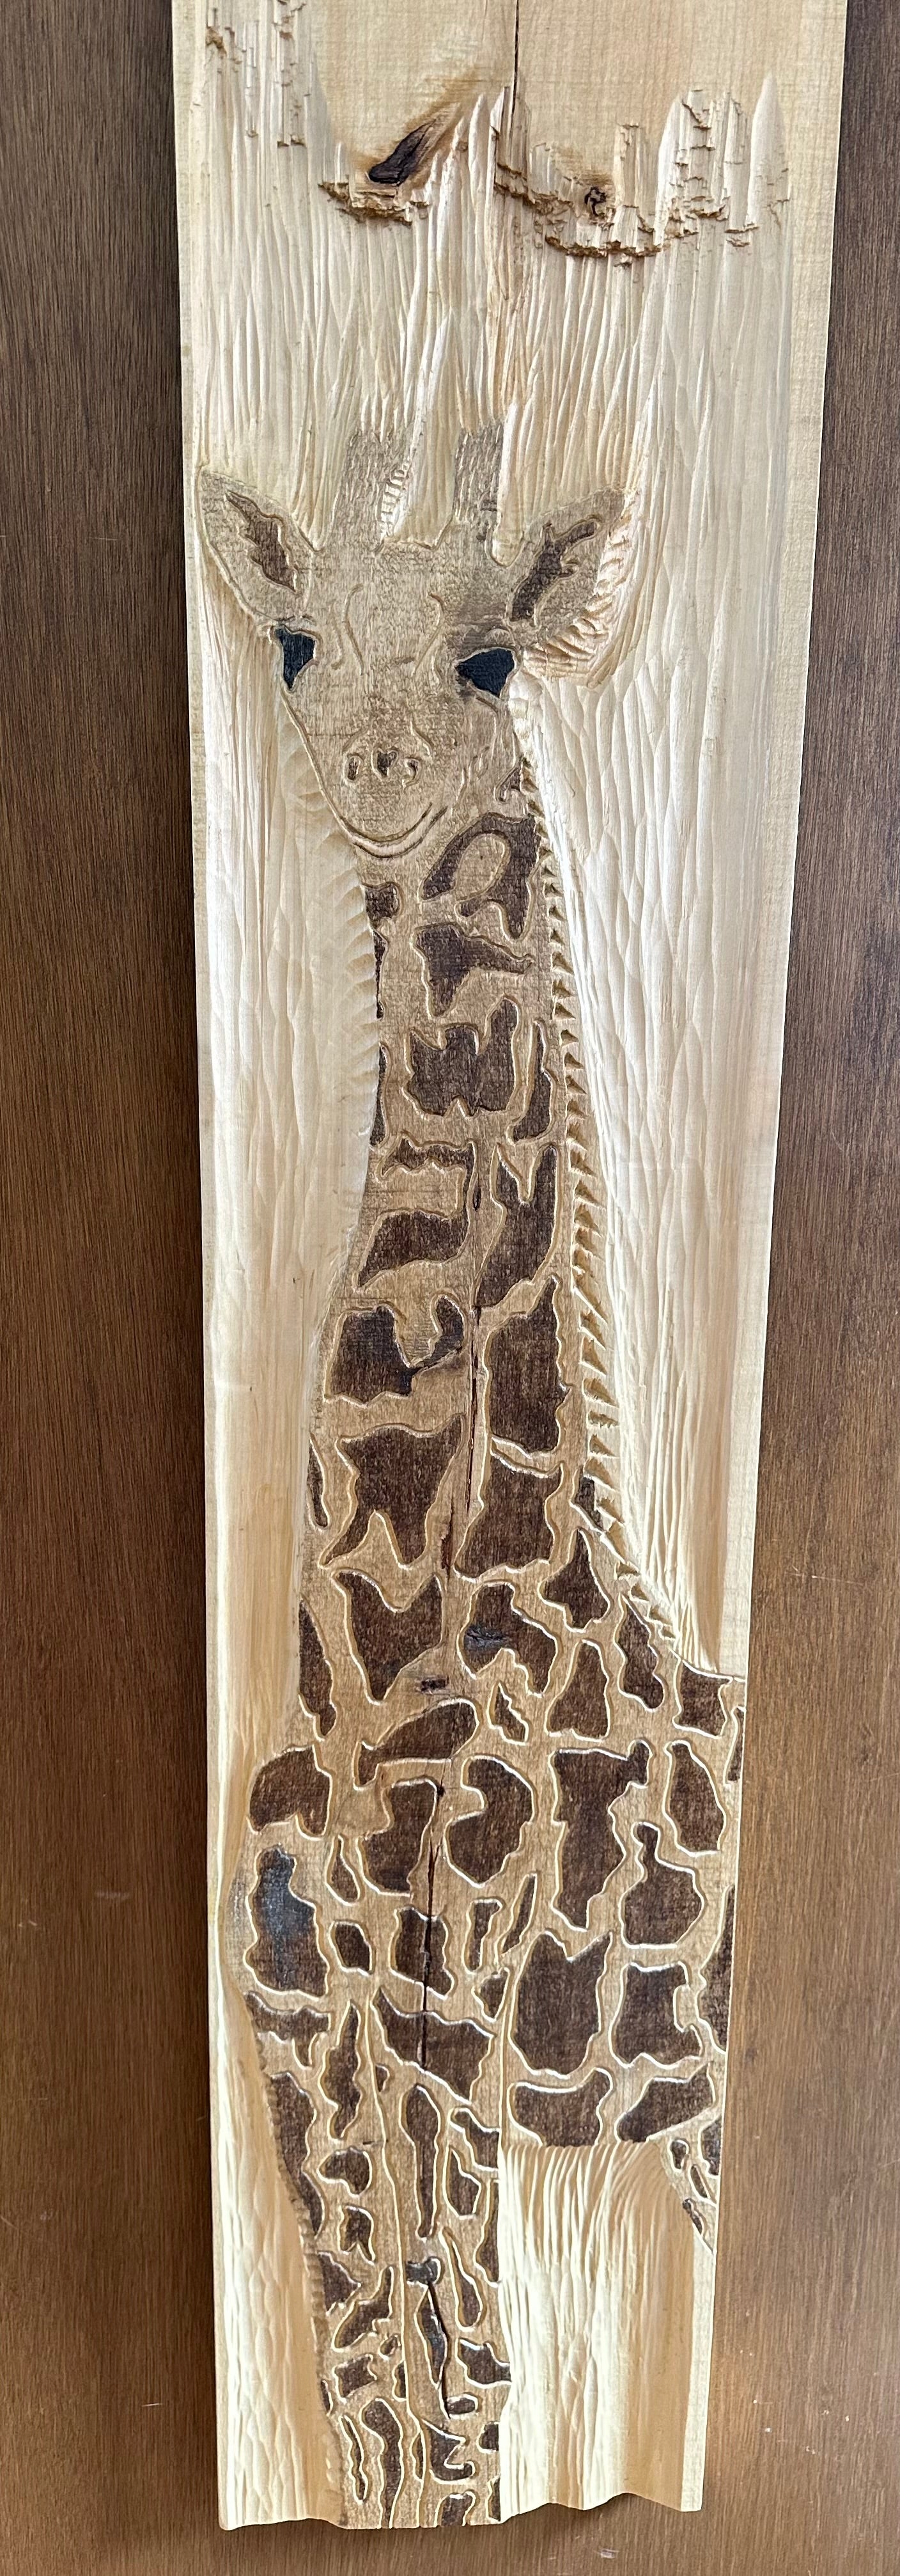 Gary Grana Wood Carved Art